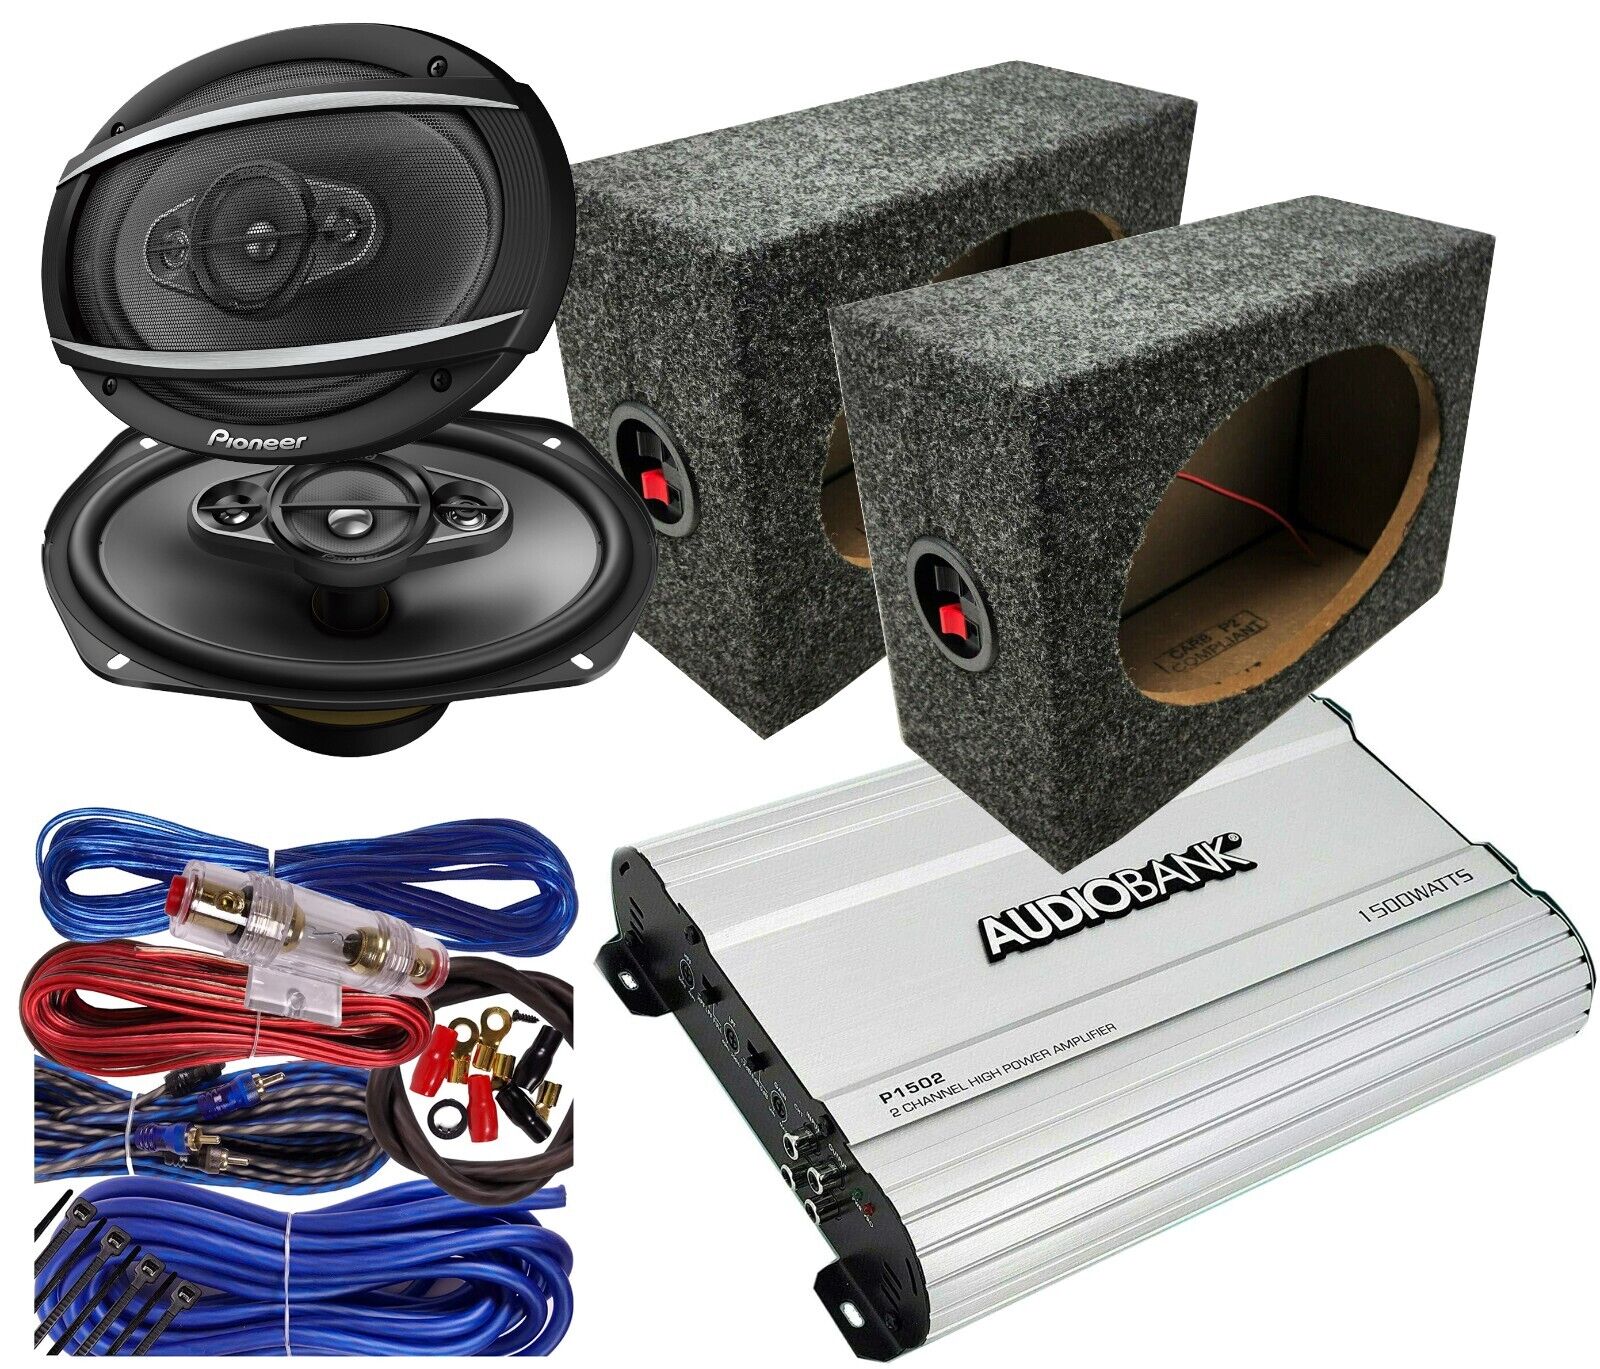 Pioneer 2x Pioneer TS-A6970 6x9" Speakers +1500W Amplifier + 2x 6x9" Speaker Box + Kit